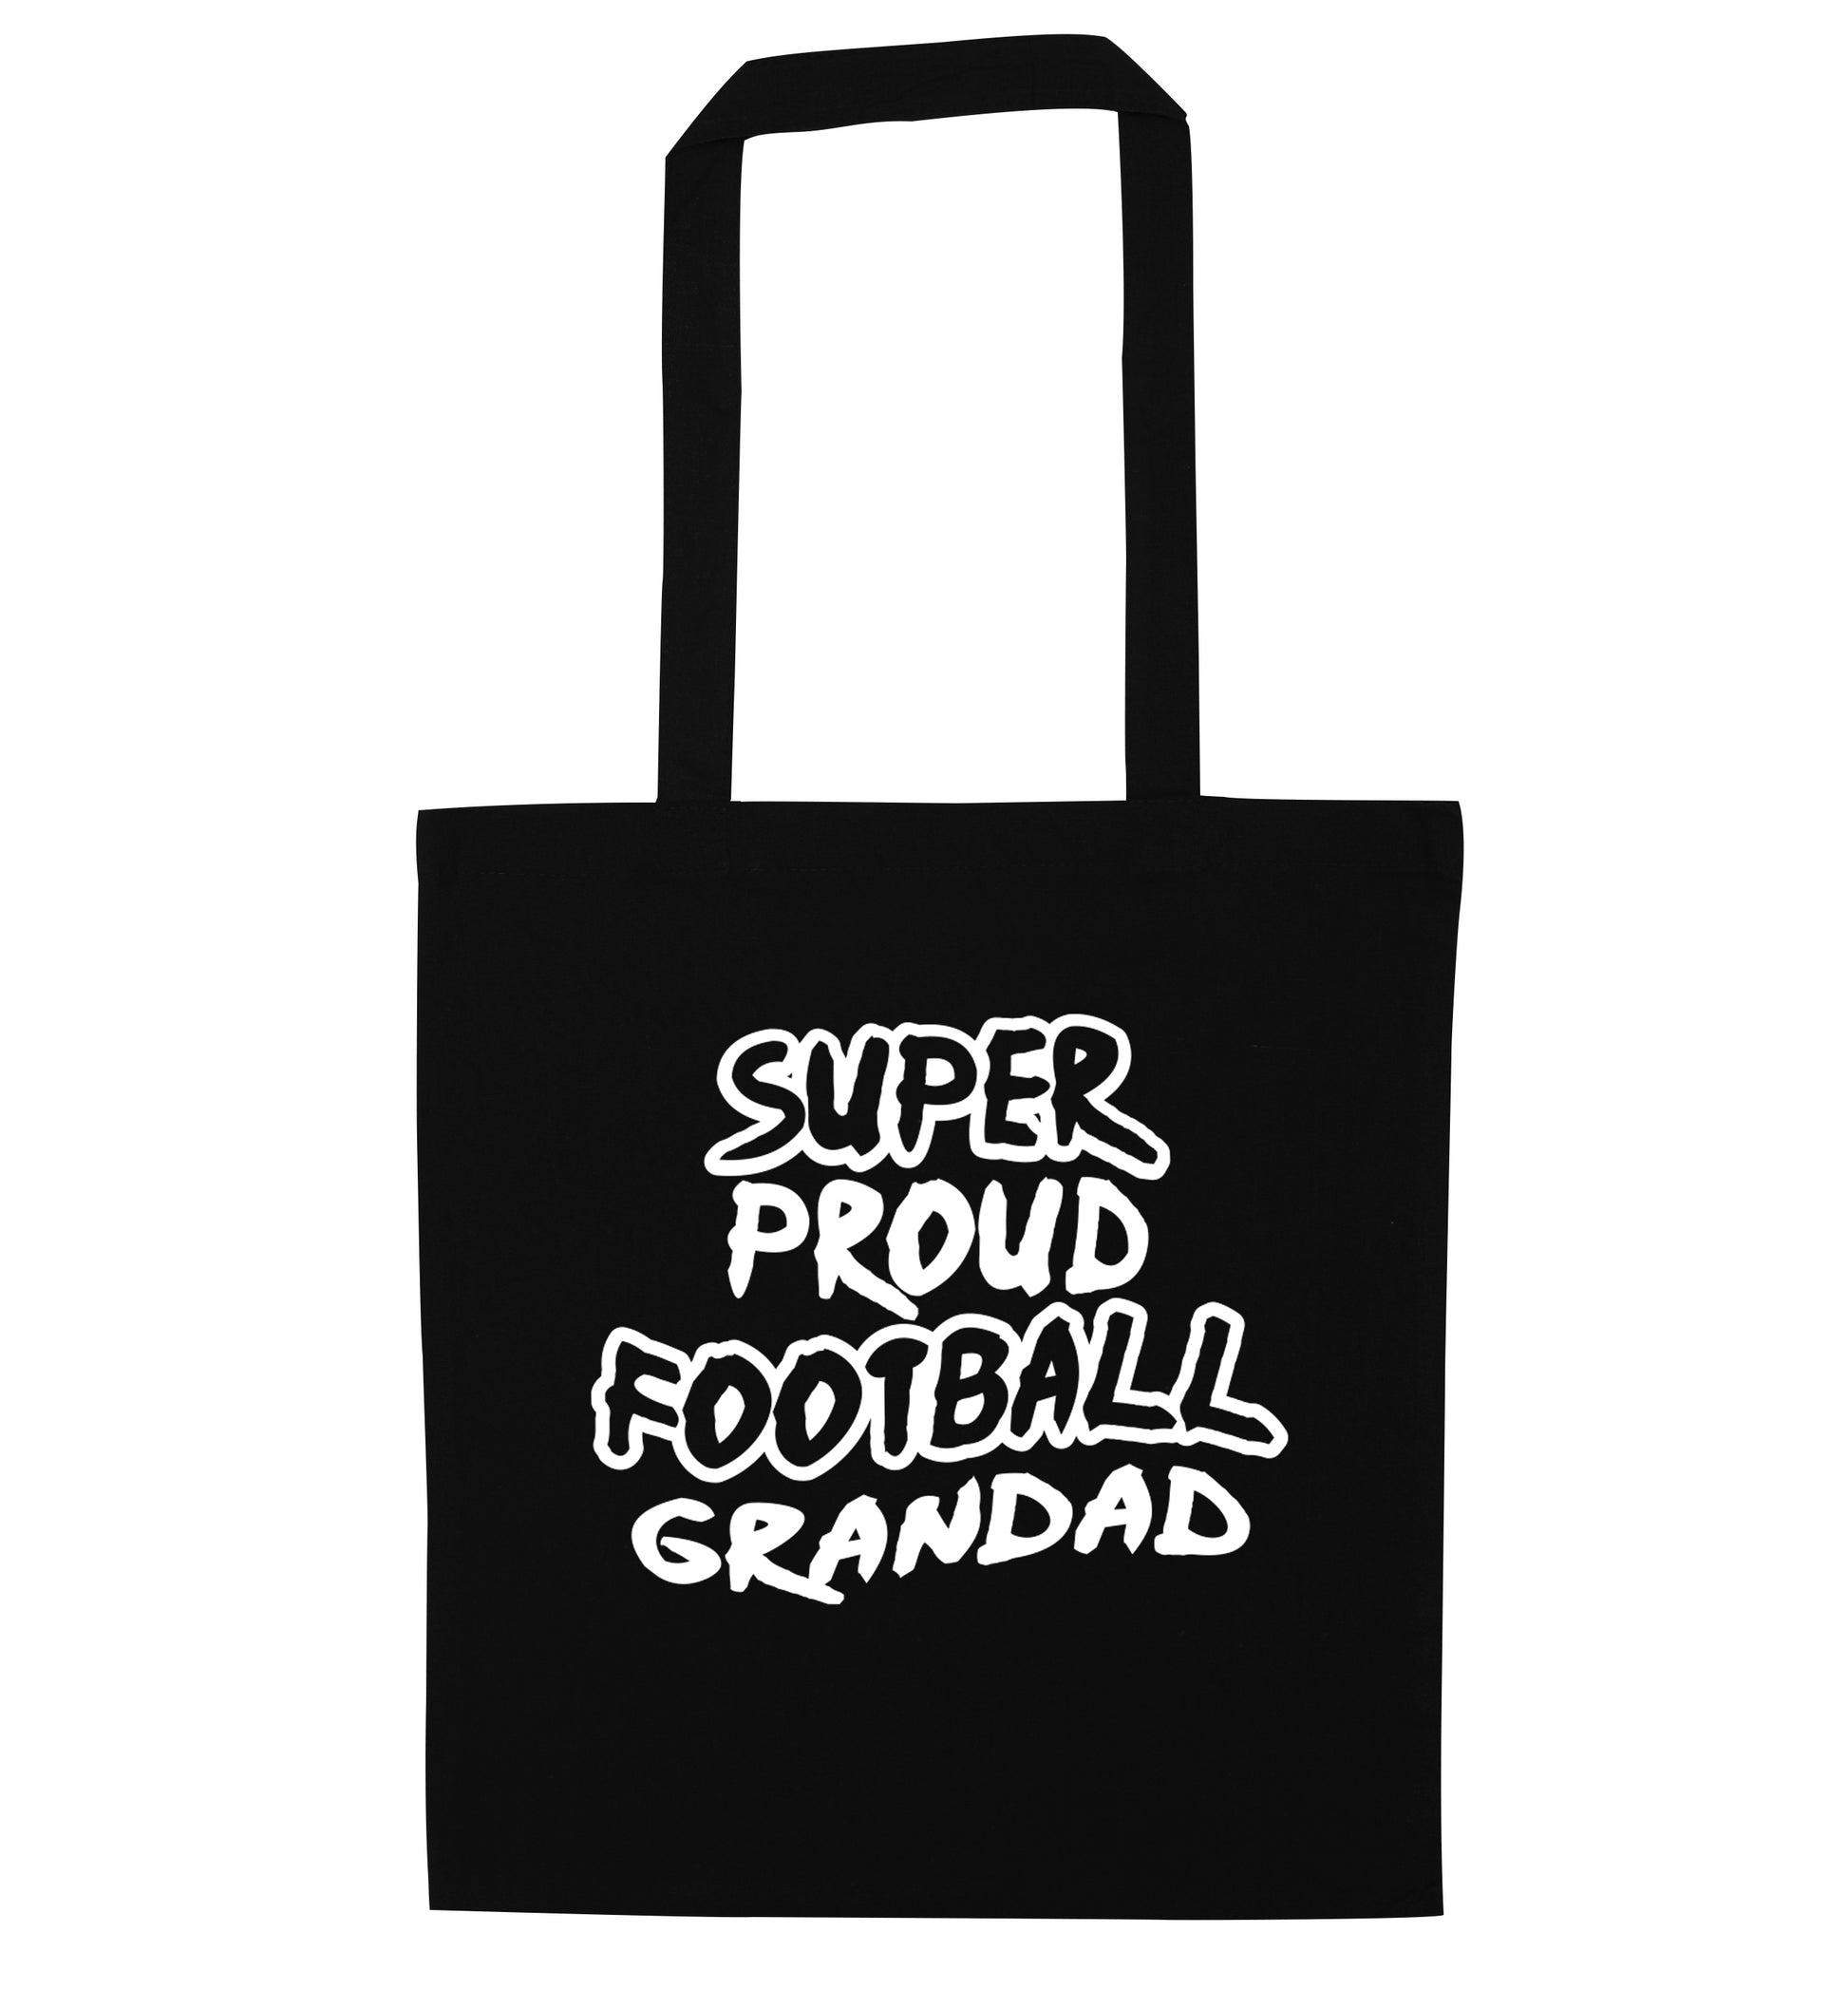 Super proud football grandad black tote bag